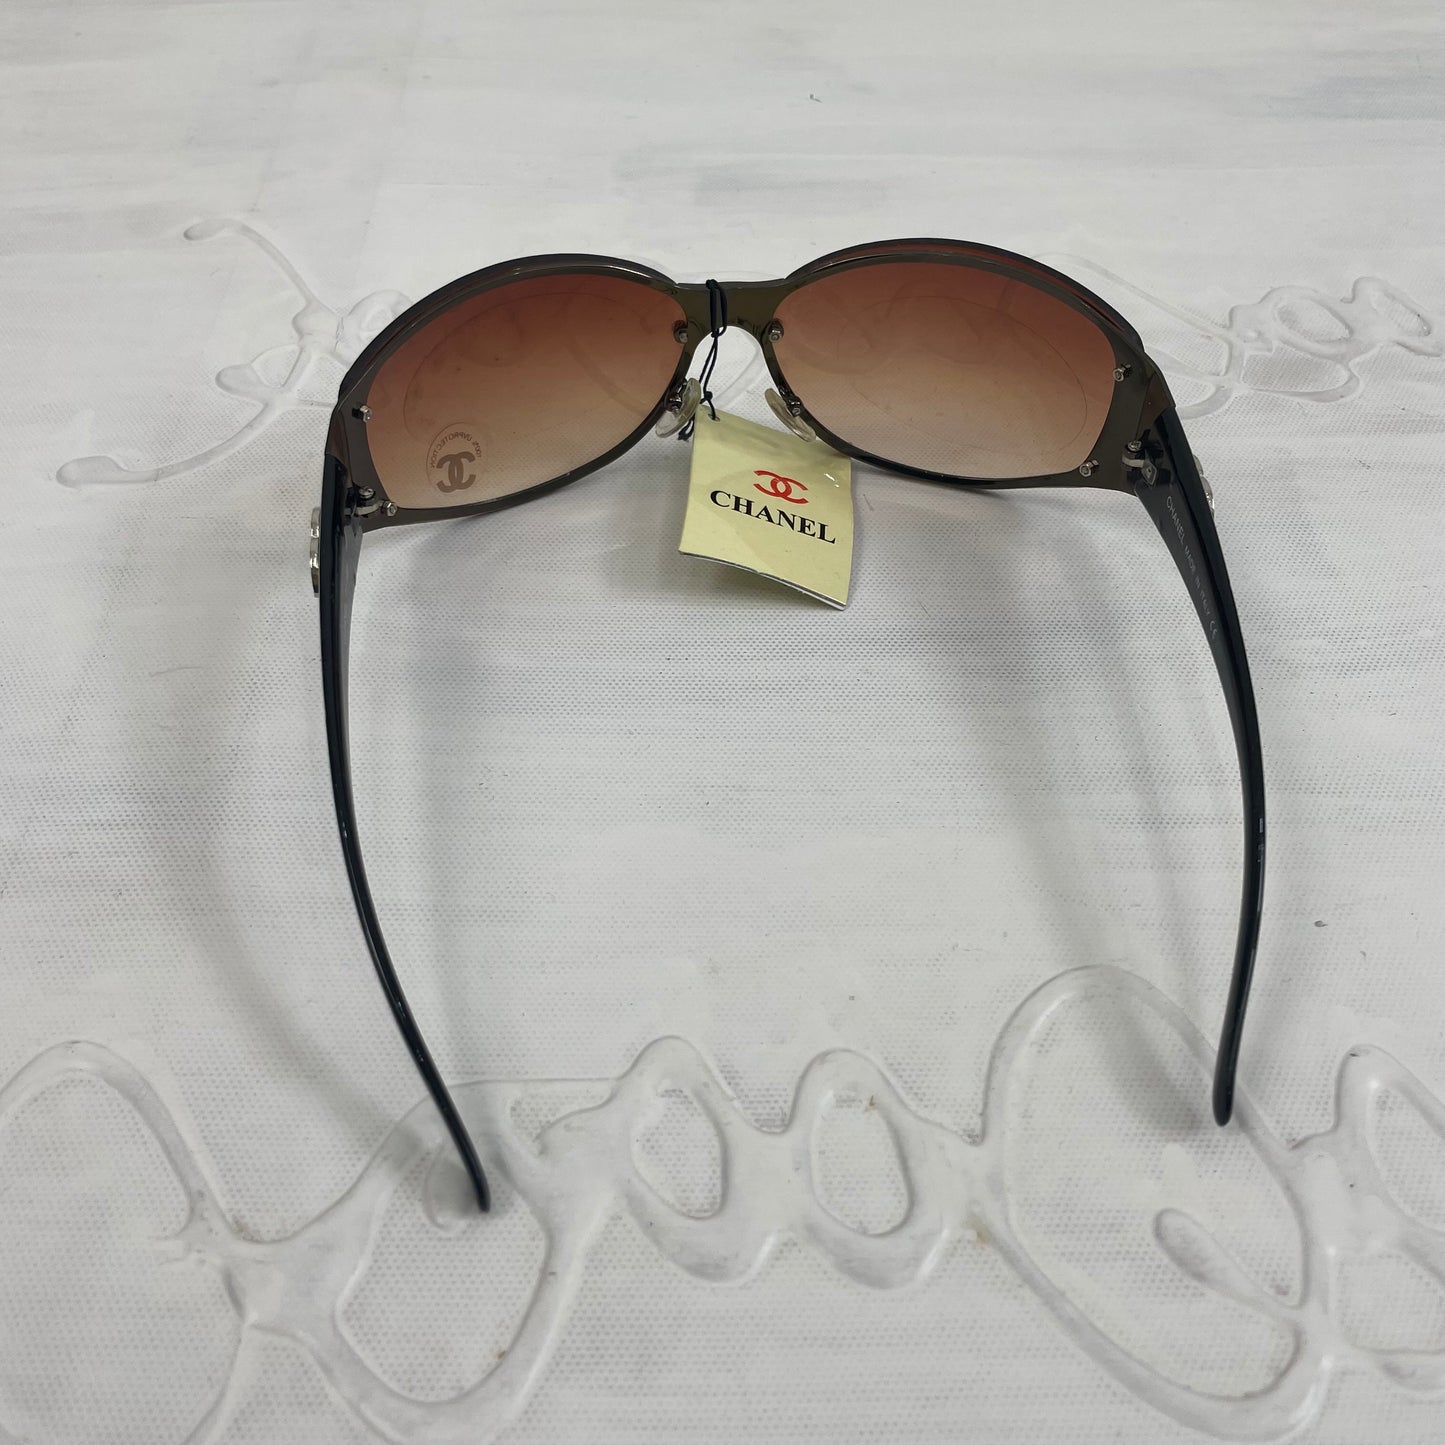 PARIS HILTON DROP | brown chanel style sunglasses with cream sides